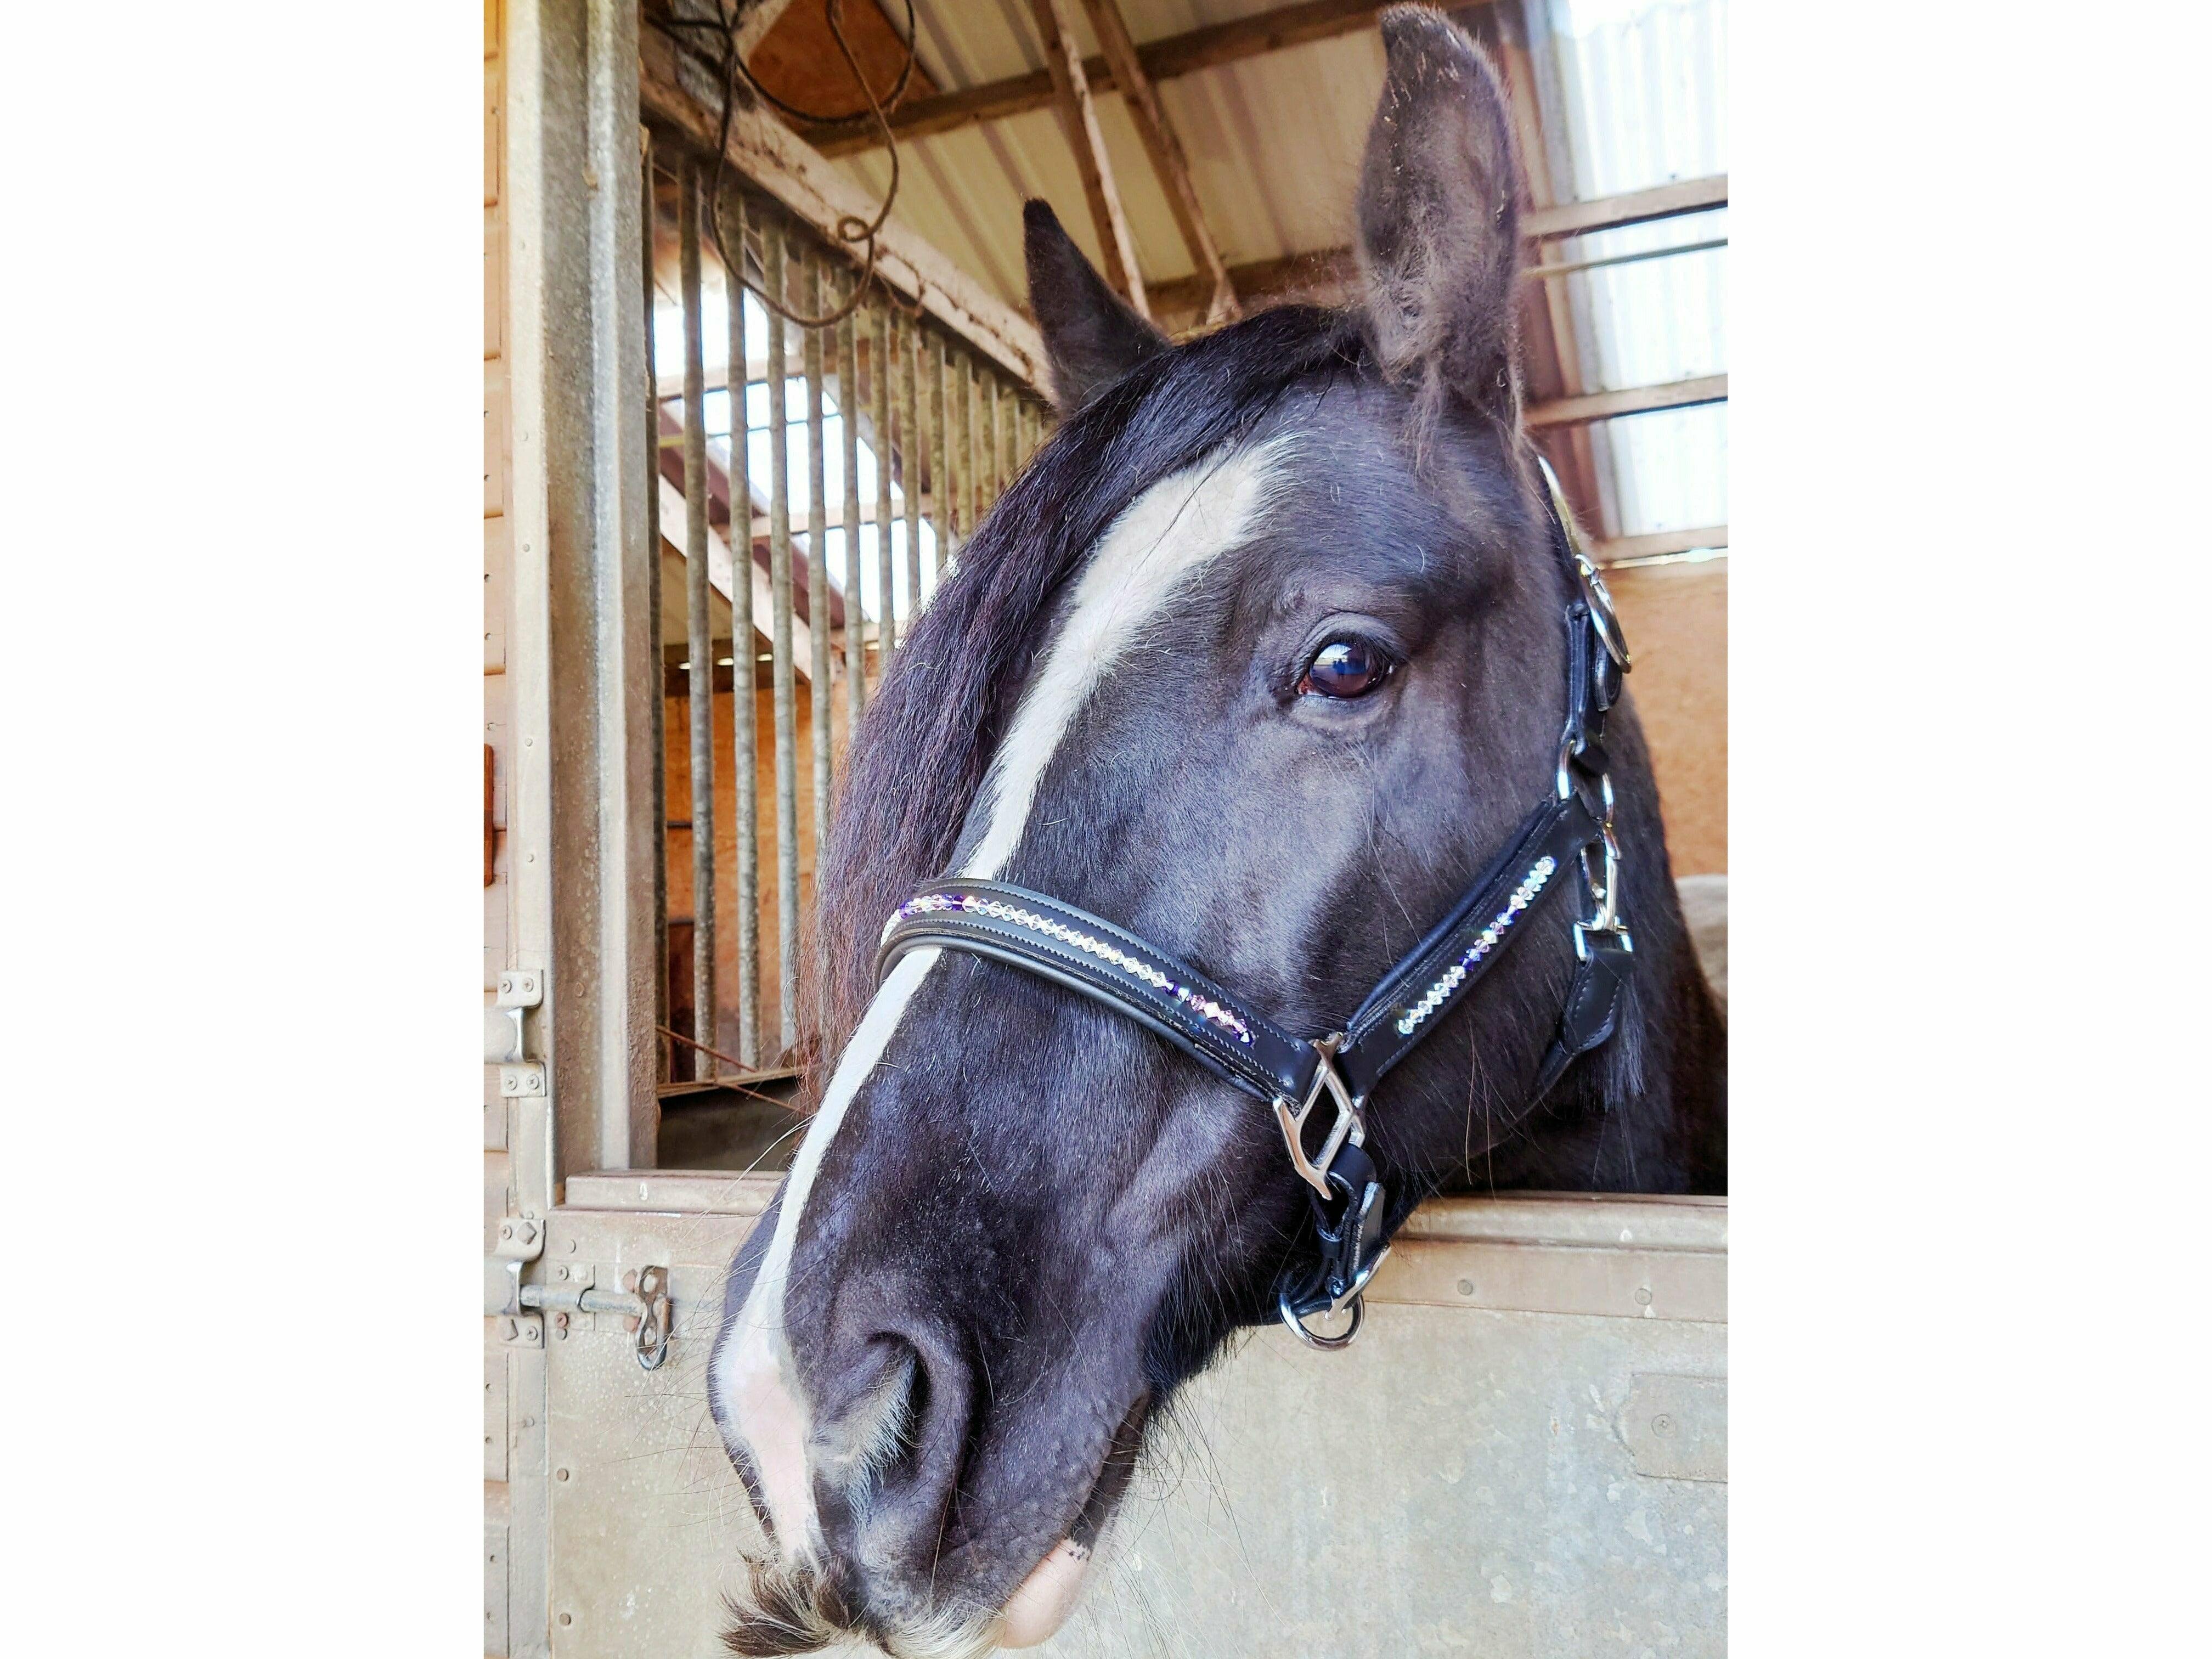 Daisy-Chain Equestrian Preciosa Crystal Leather Headcollar